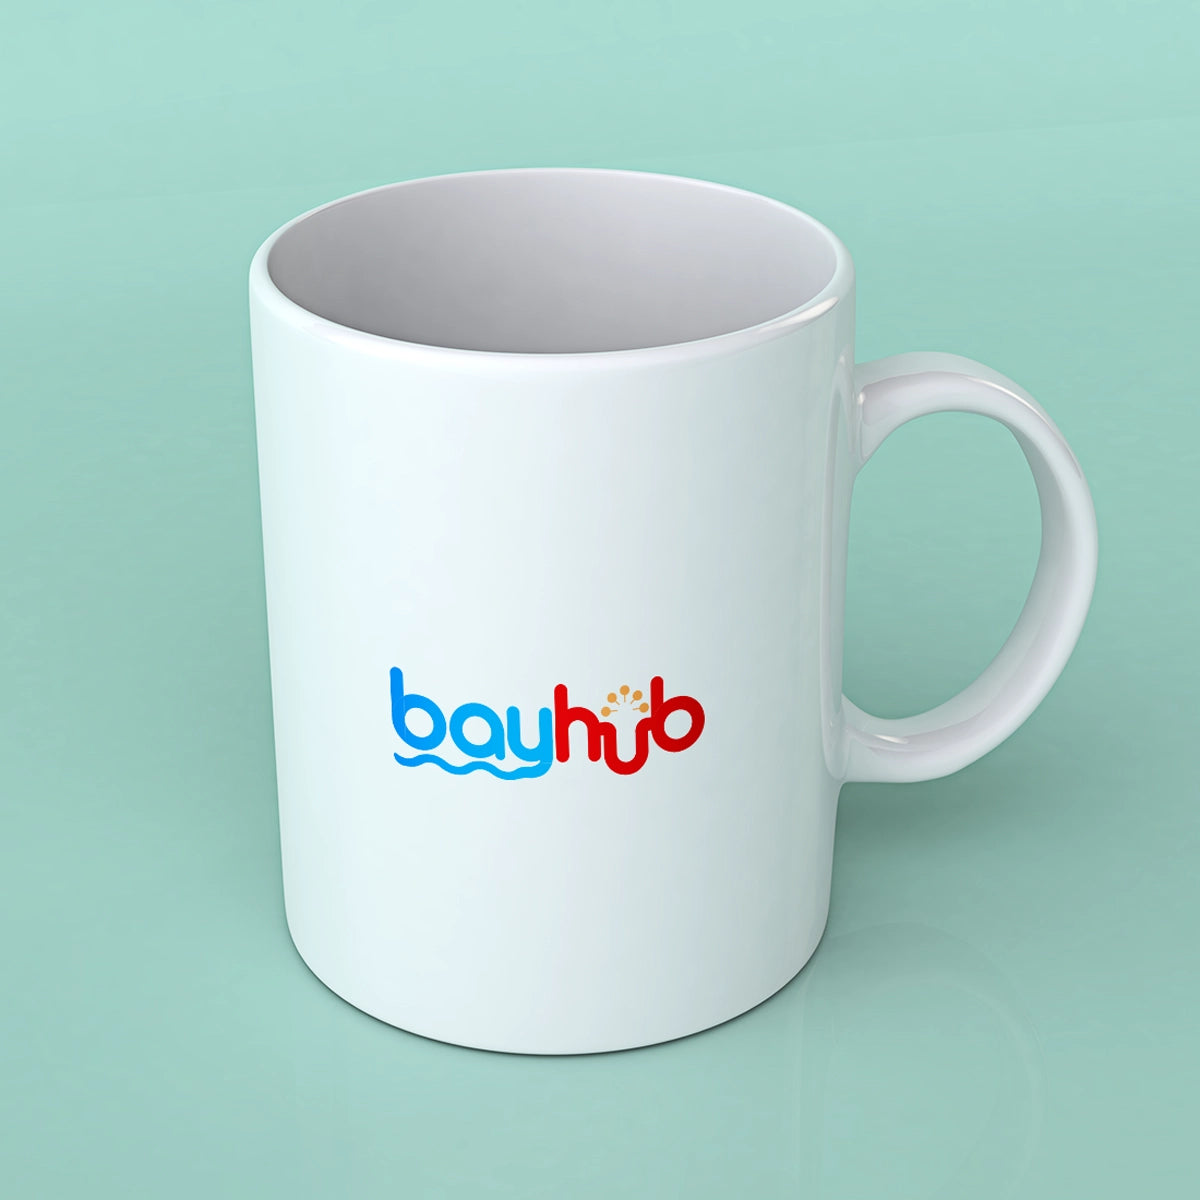 Bayhub.com